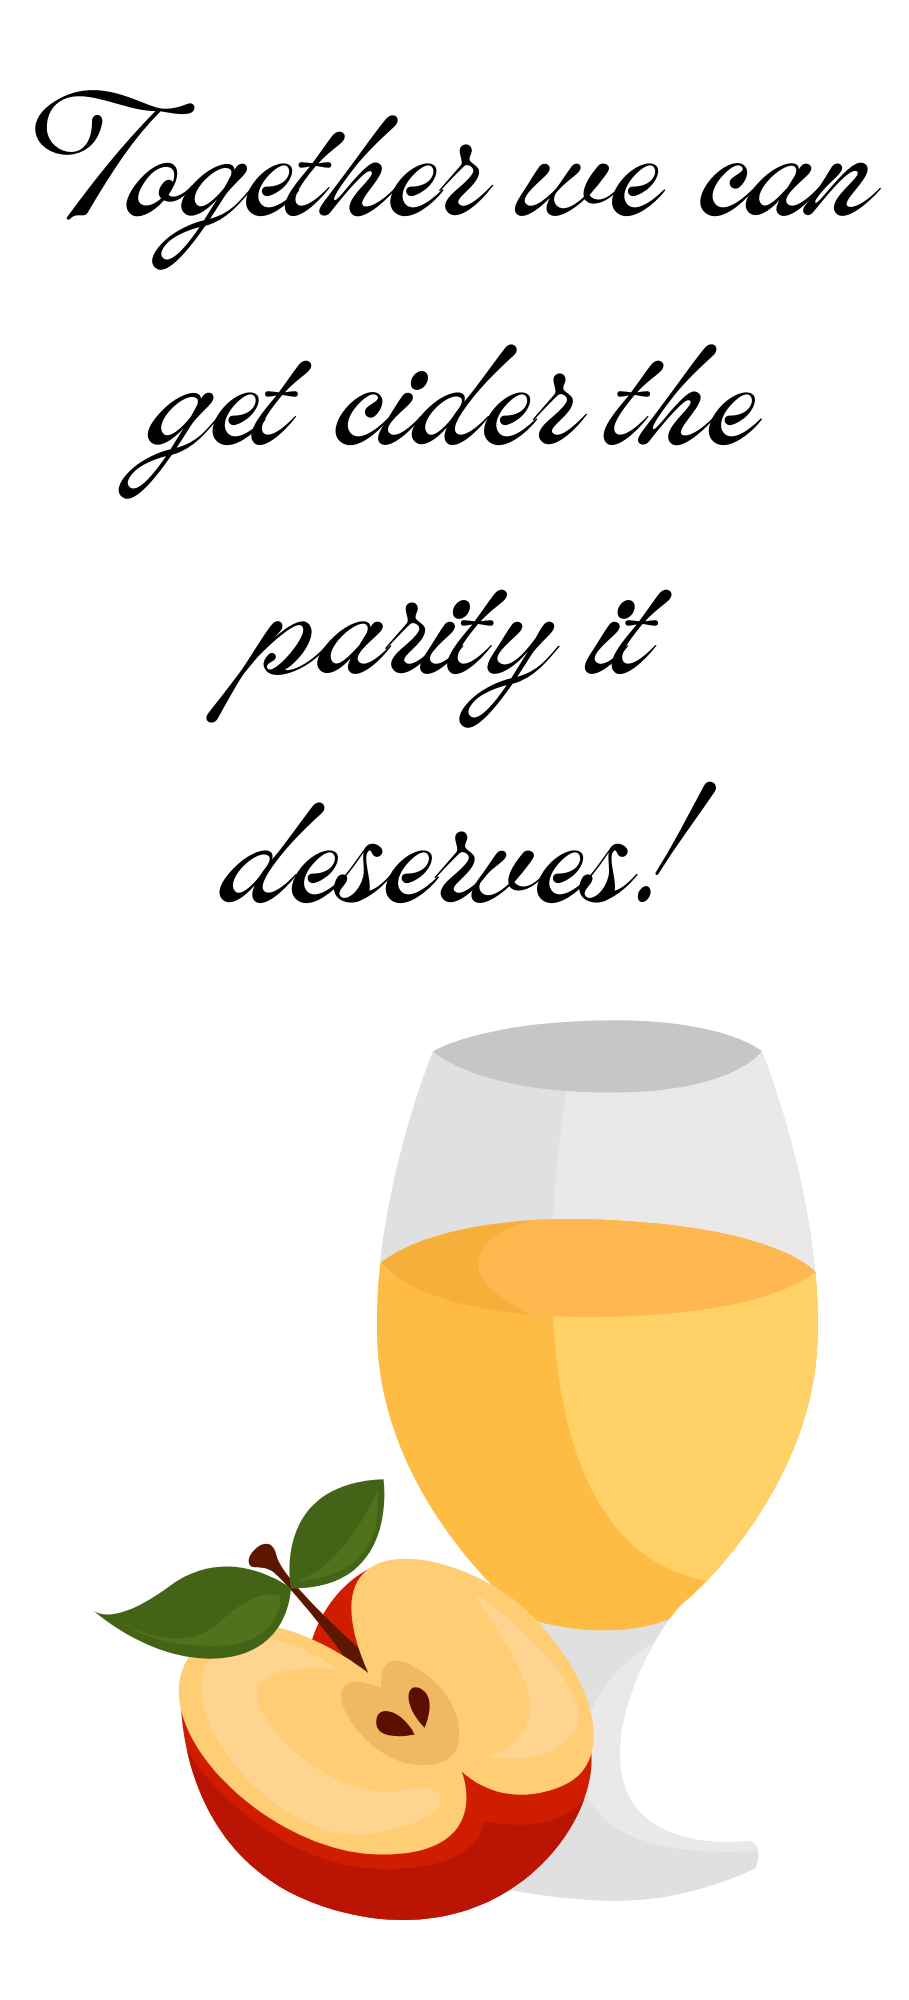 Together we can get cider the parity it deserves!